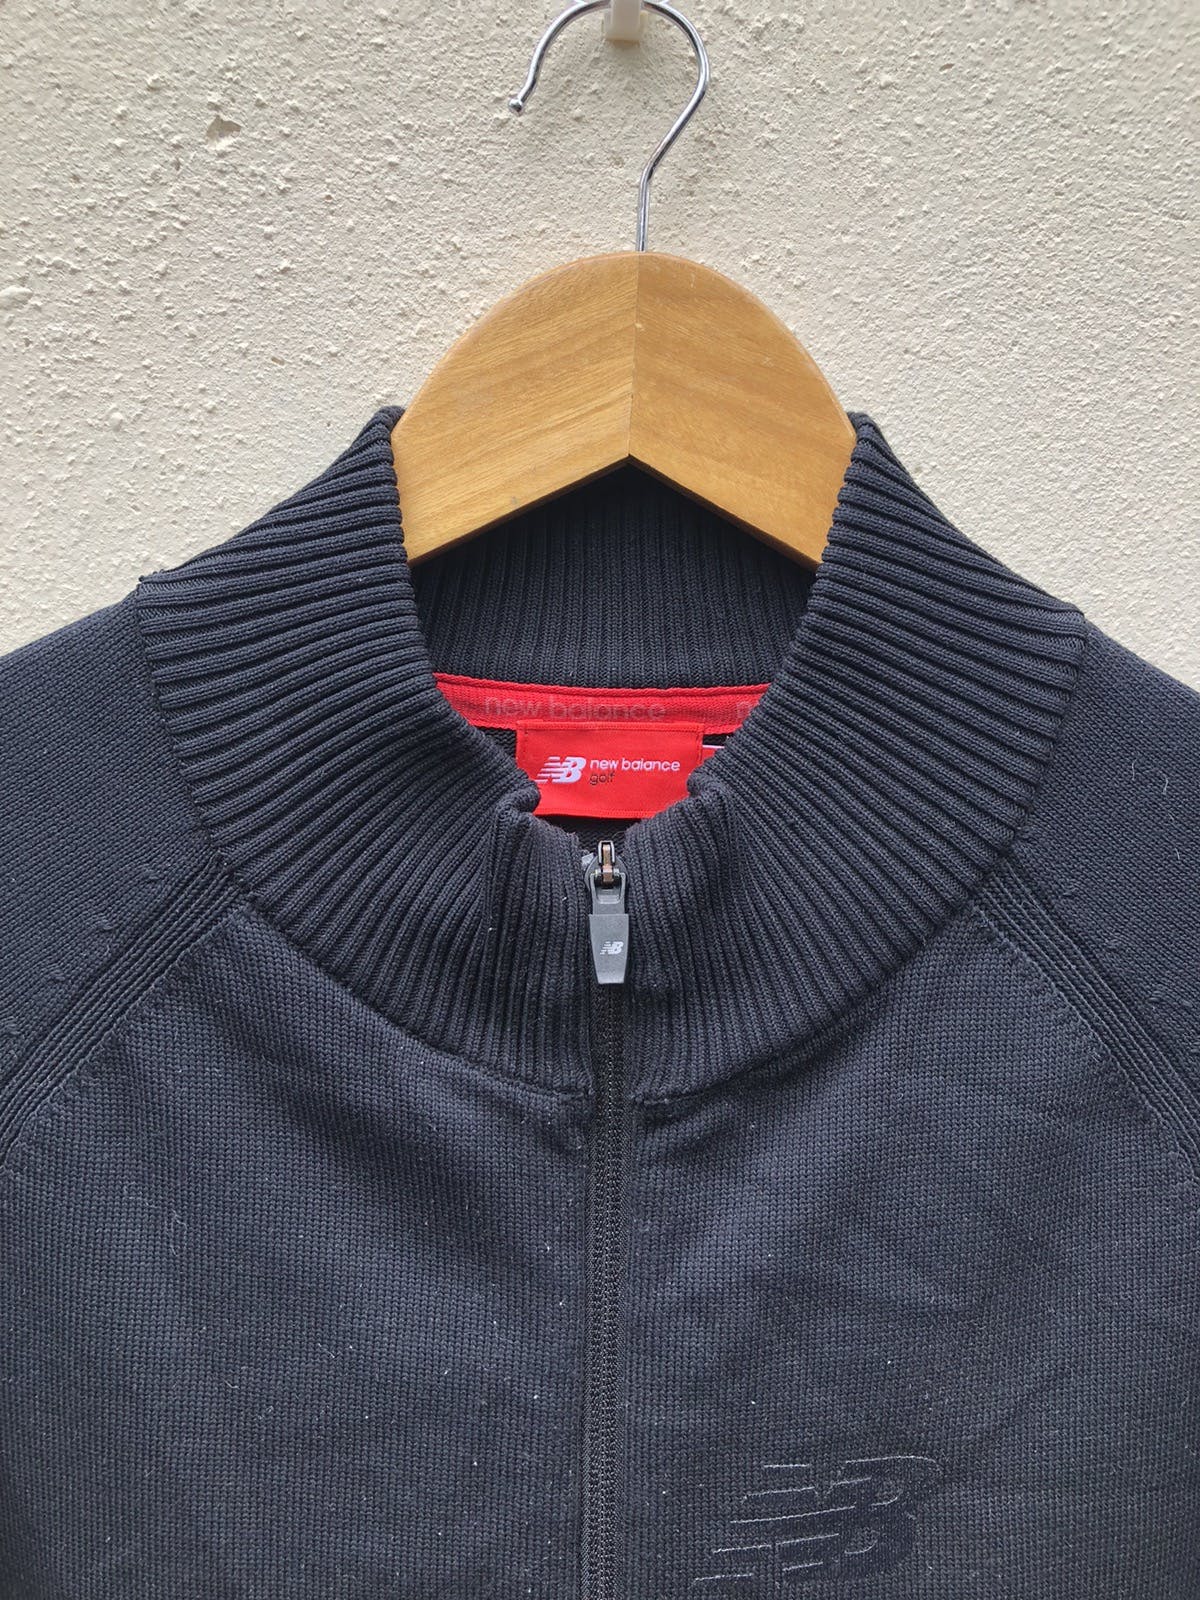 New Balance Golf Knit Zip up Black Sweaters - 4